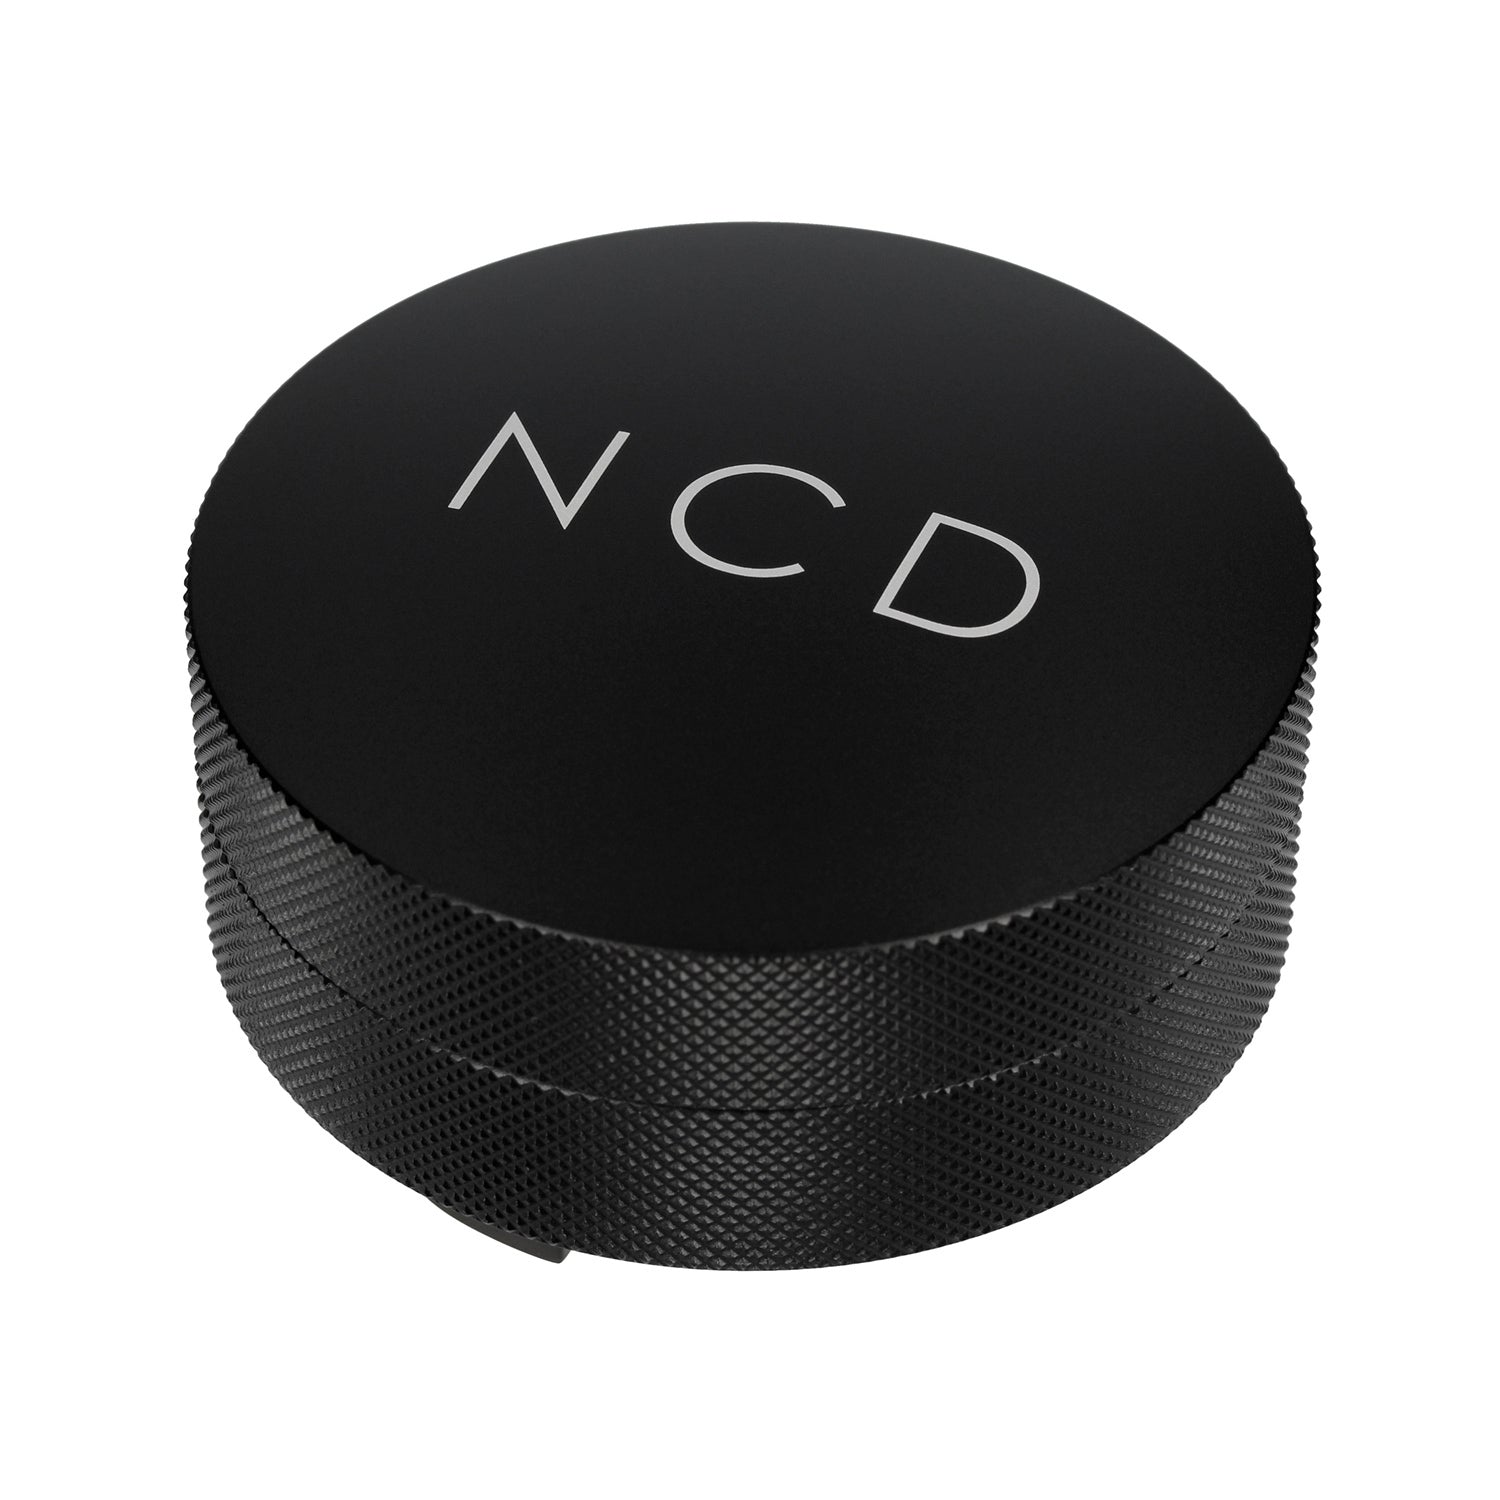 NCD Coffee Distributor - Black